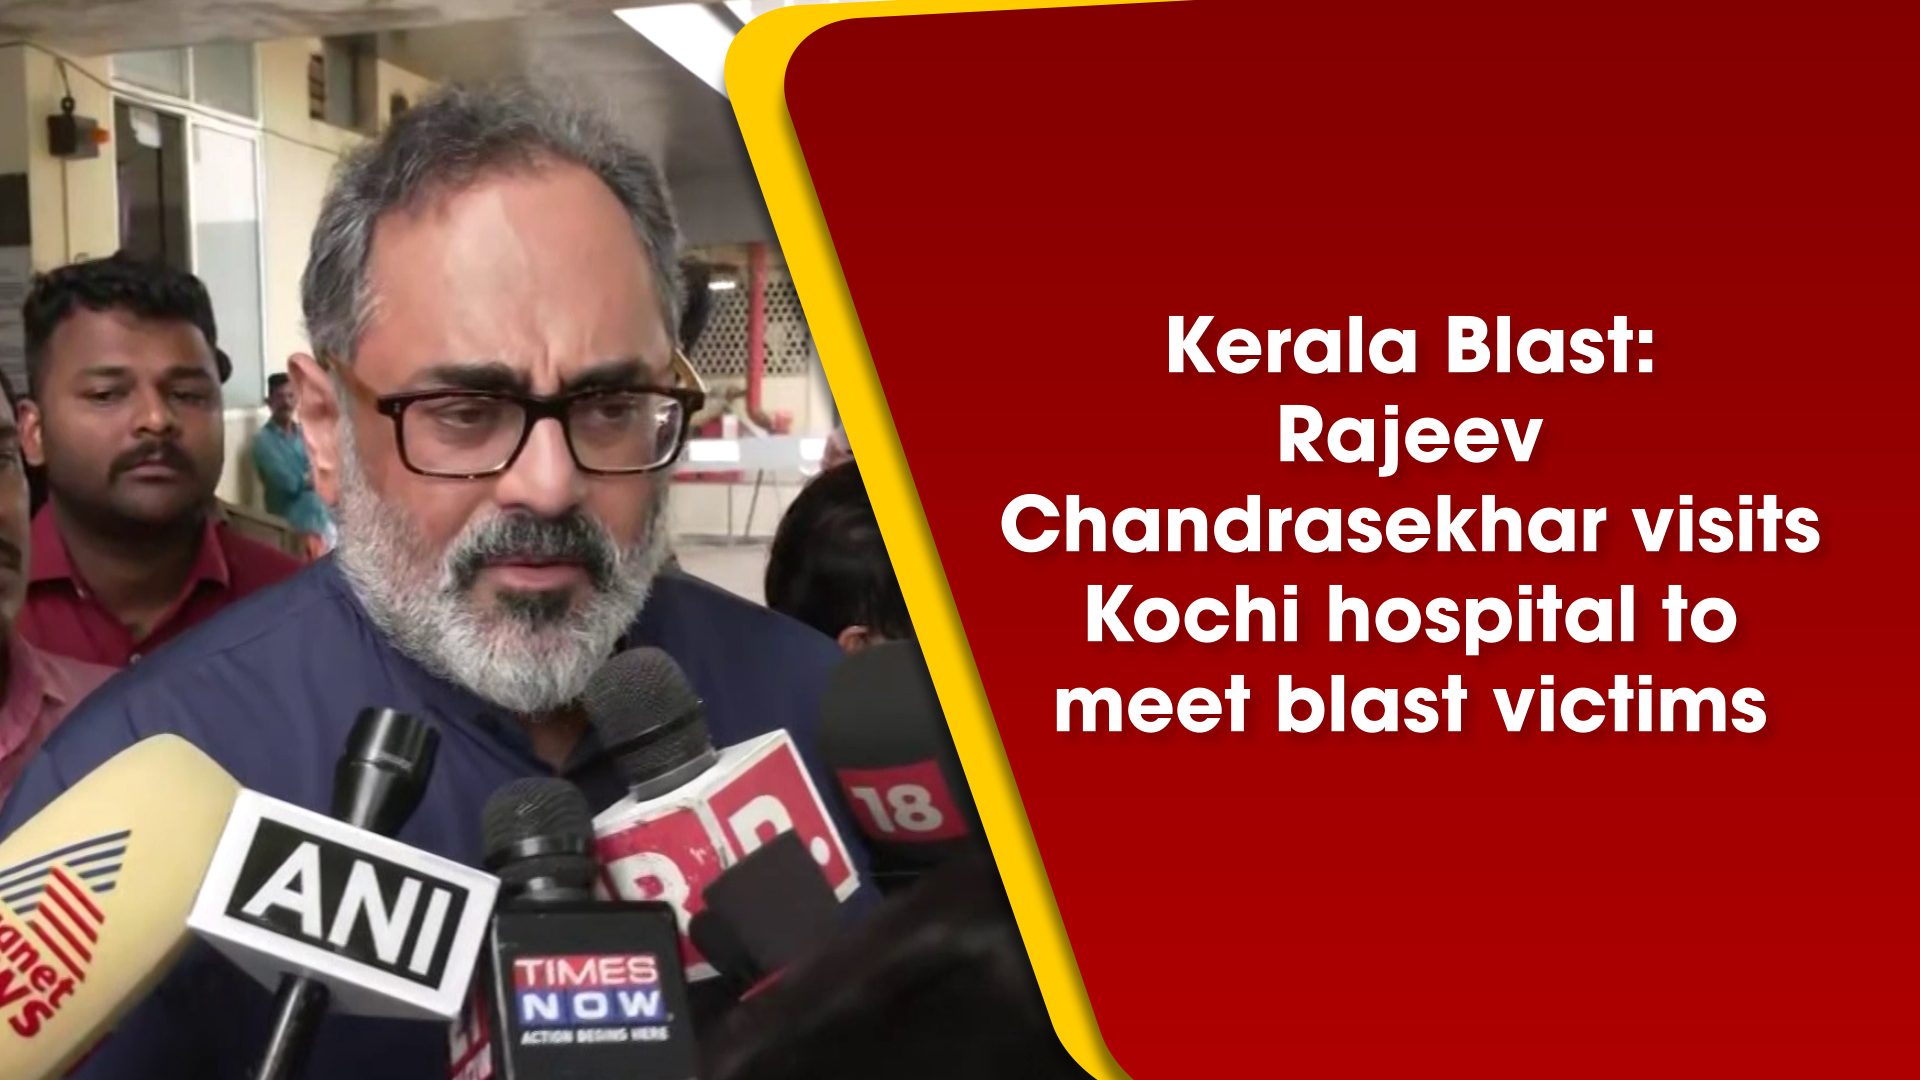 Kerala Blast: Rajeev Chandrasekhar visits Kochi hospital to meet blast victims